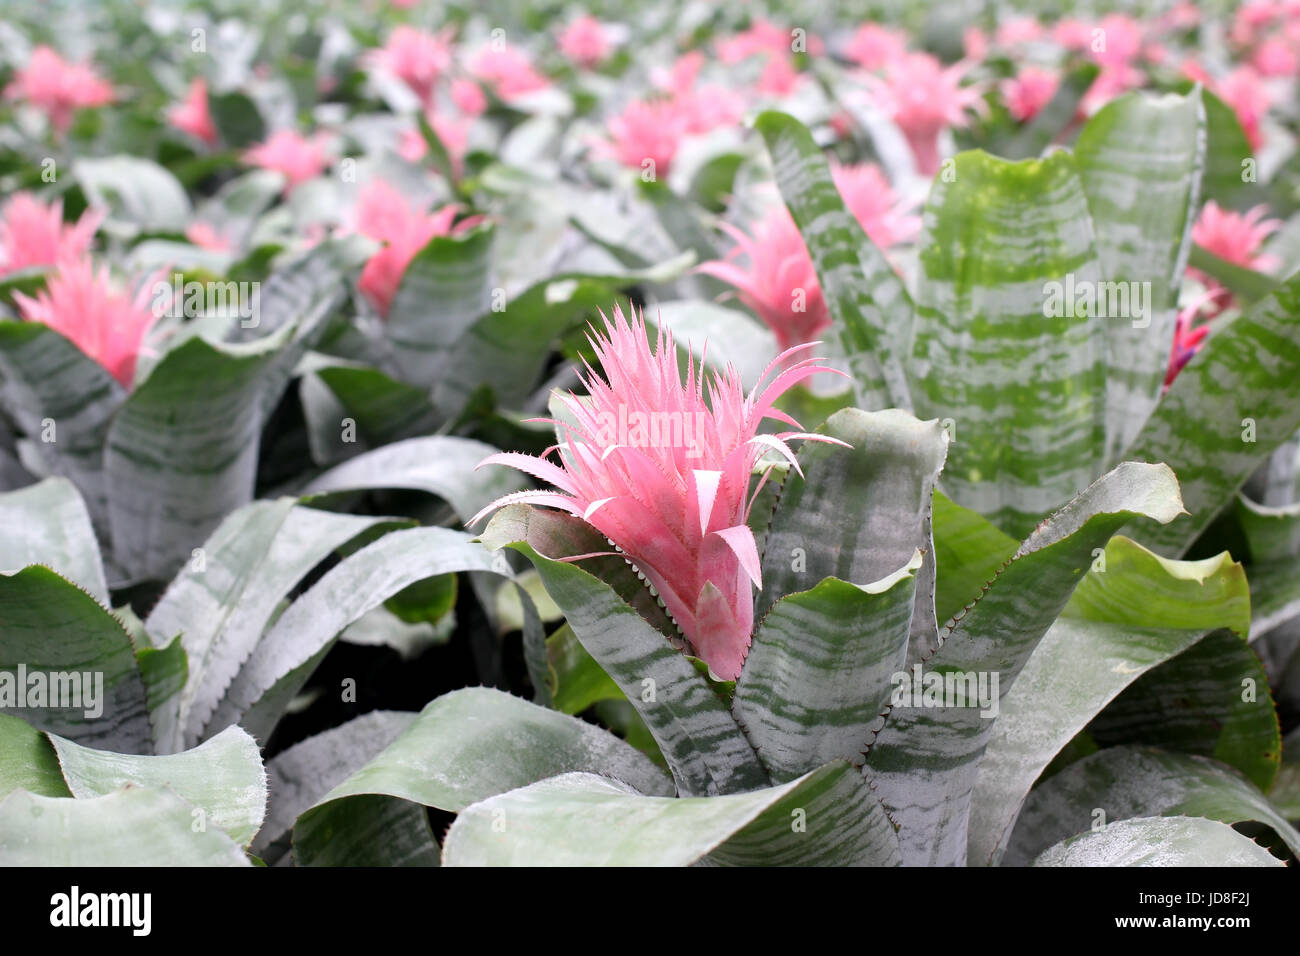 pink bromeliad guzmania magnifica flower in garden Stock Photo